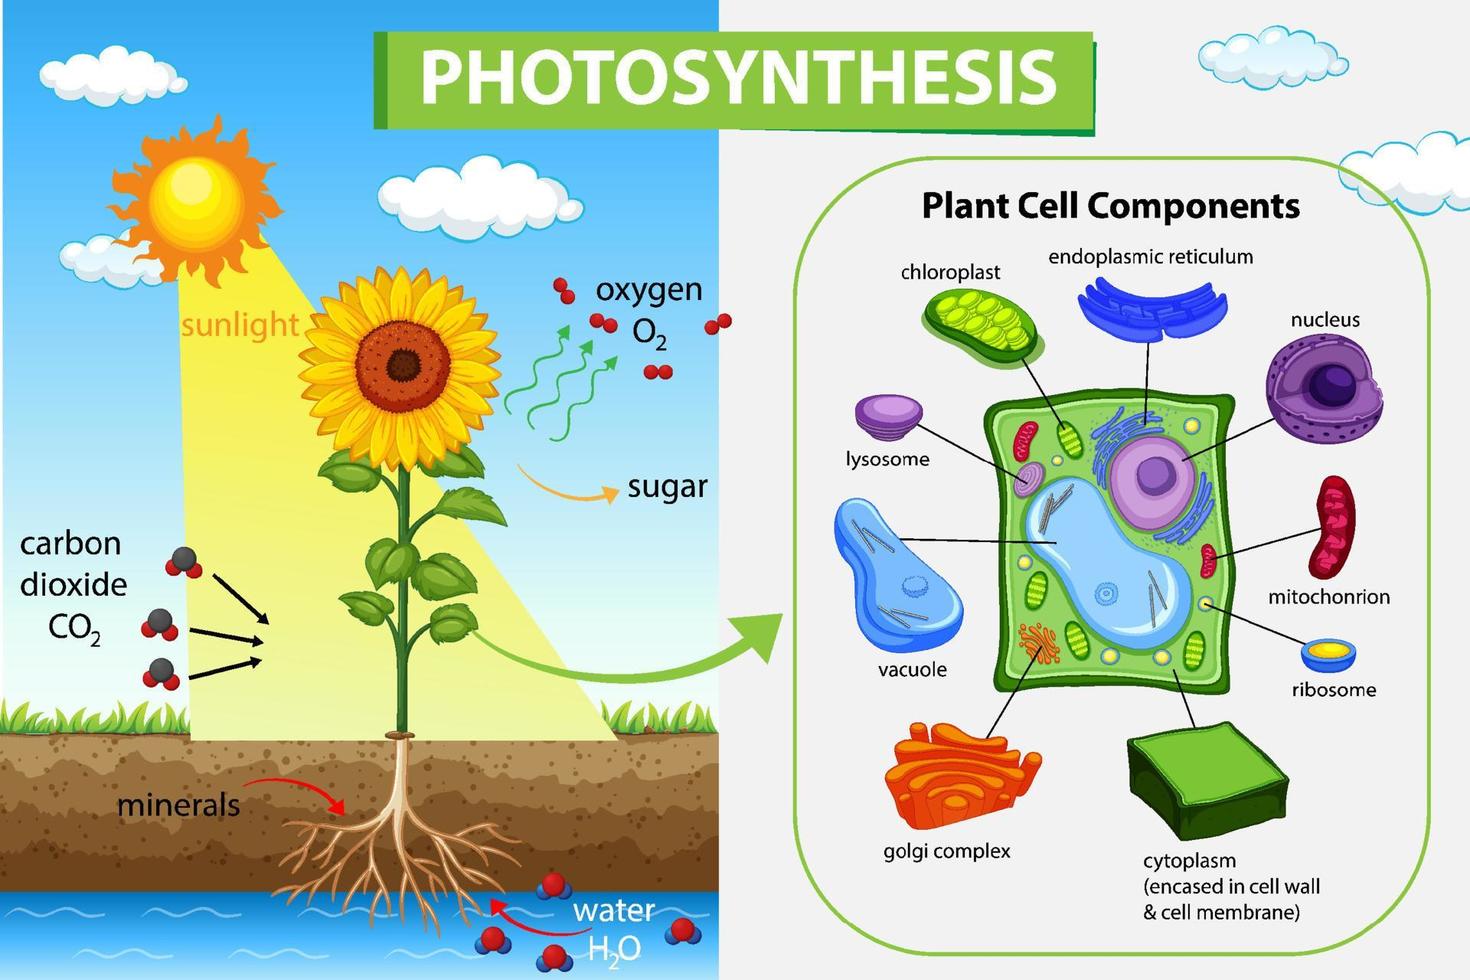 diagrama mostrando o processo de fotossíntese na planta vetor